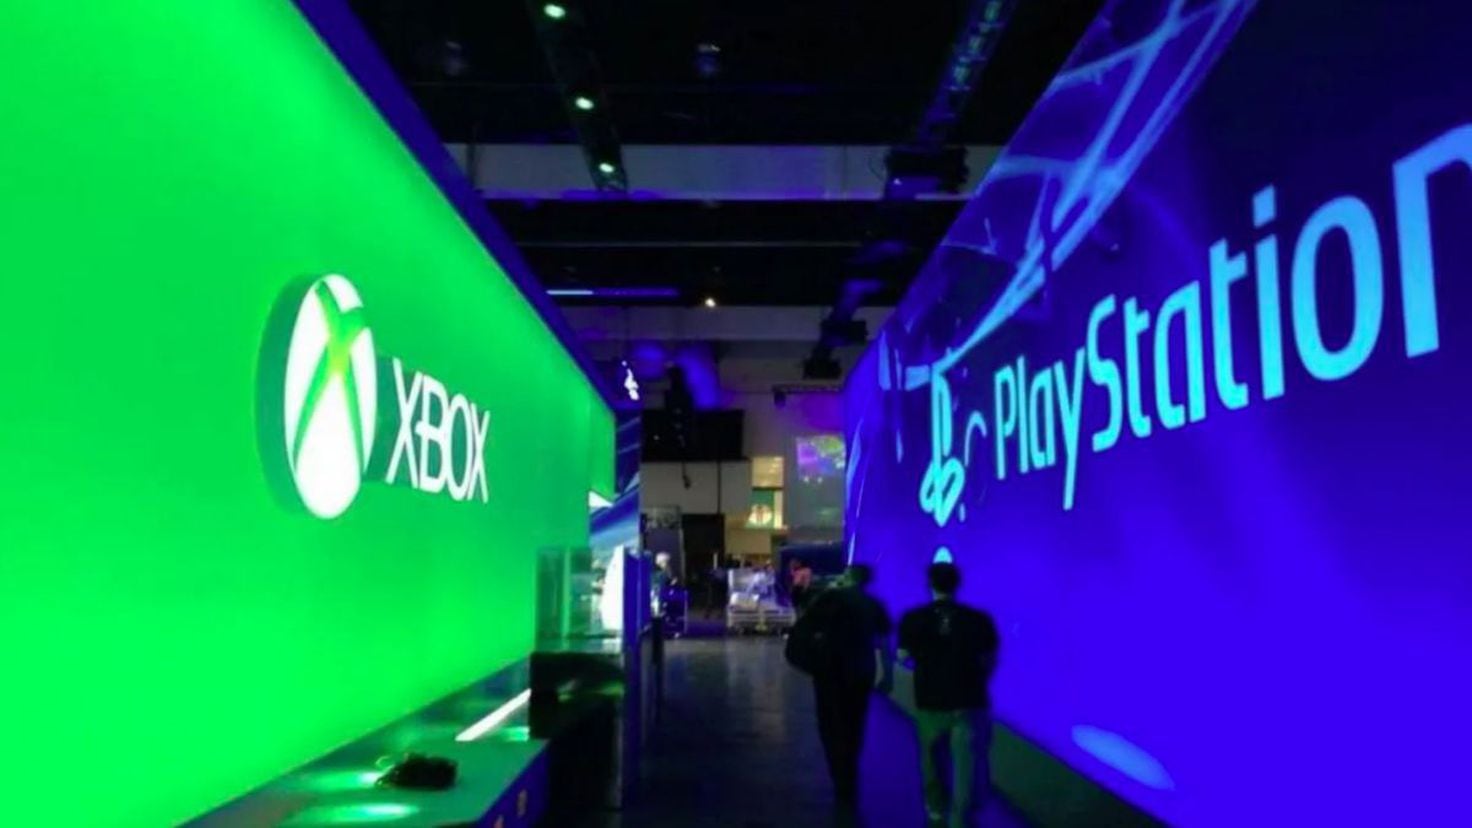 The Battle for Gaming Dominance: Microsoft vs Sony